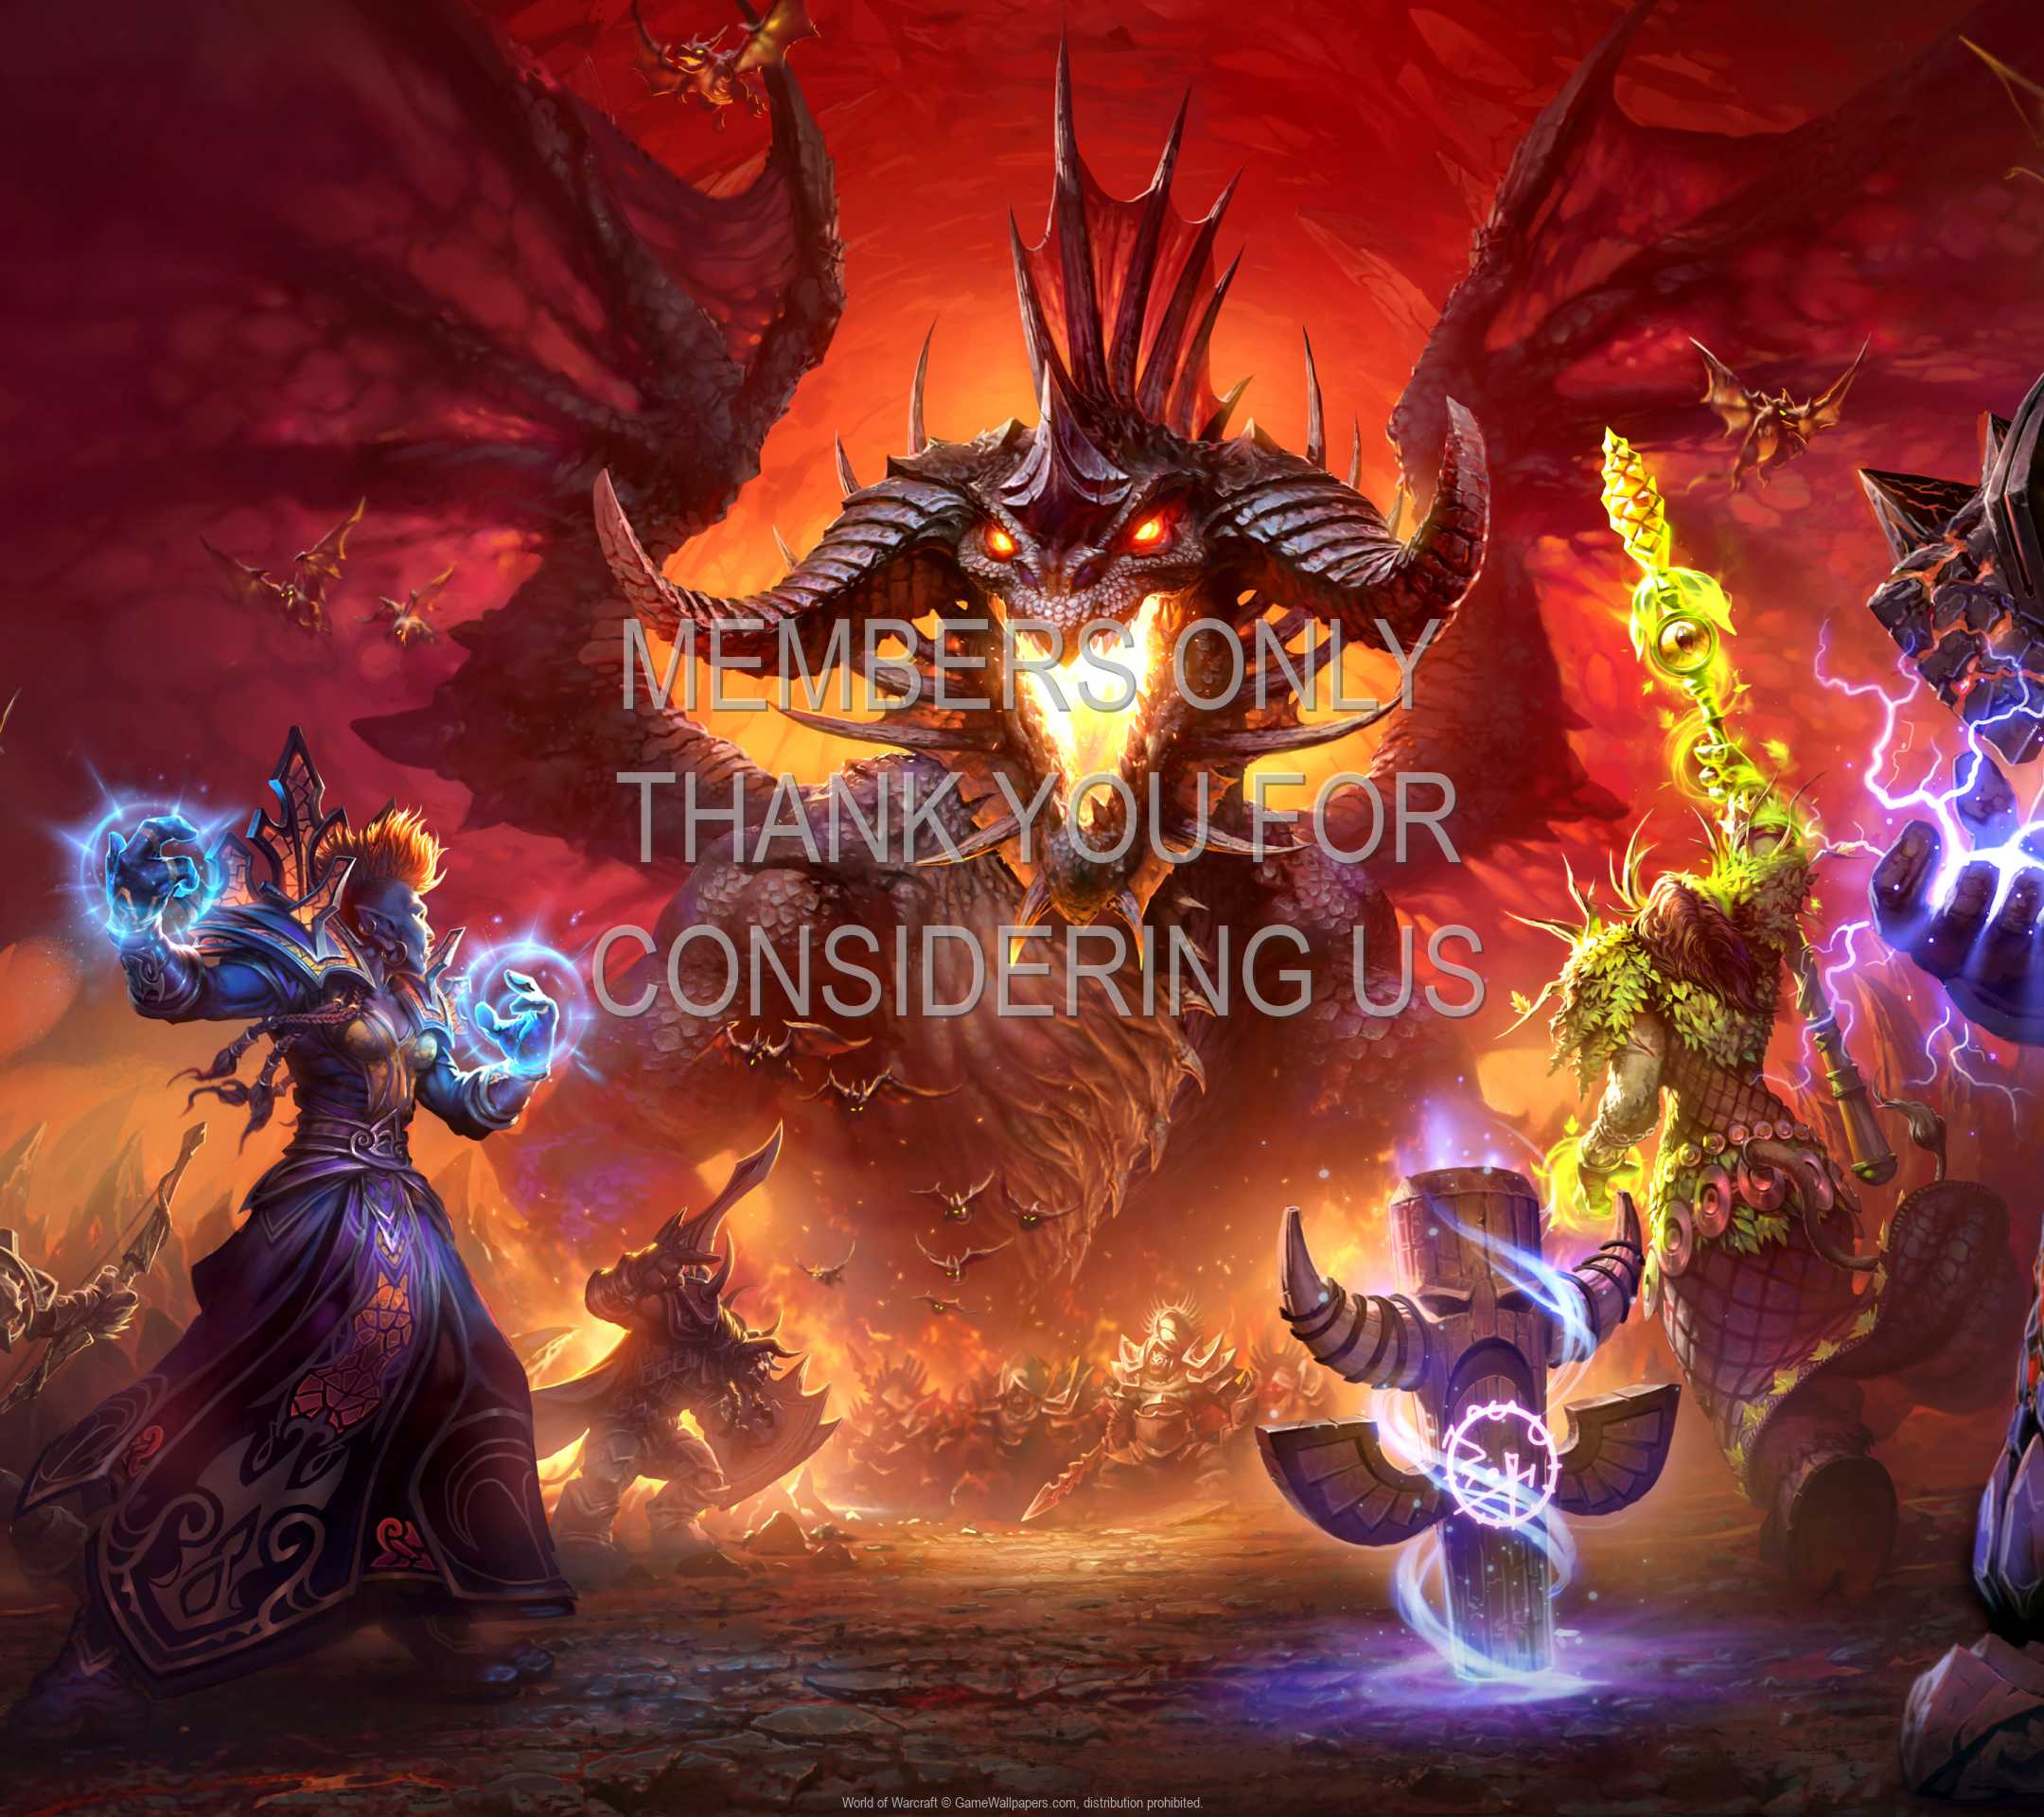 World of Warcraft 1080p Horizontal Mobile wallpaper or background 19